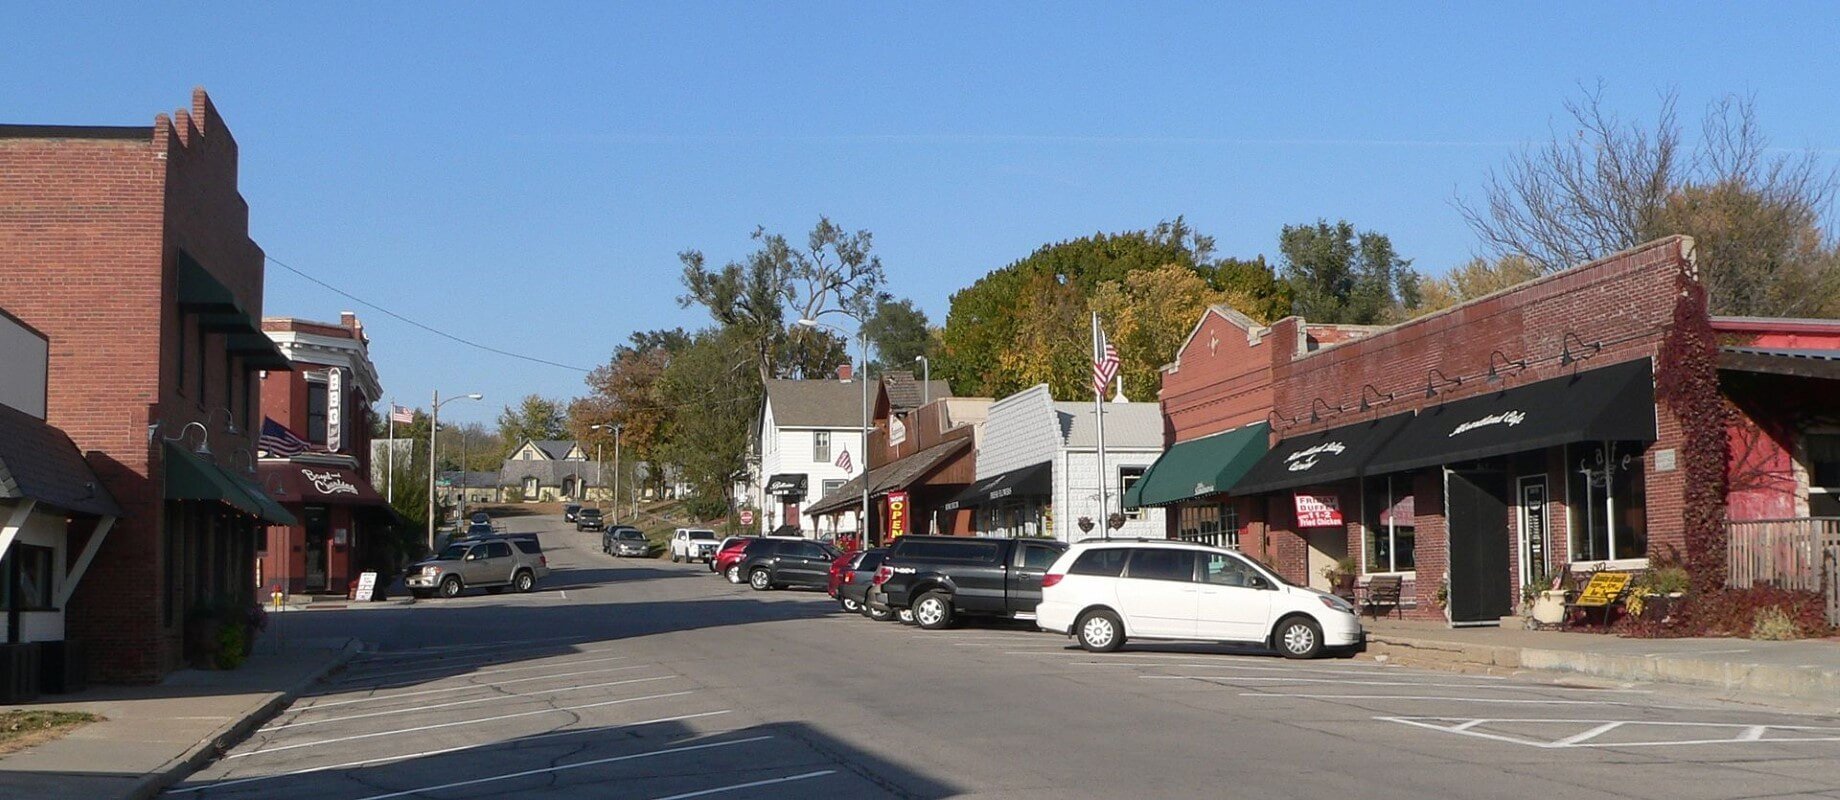 Businesses on a street in downtown Elhorn, Nebraska.